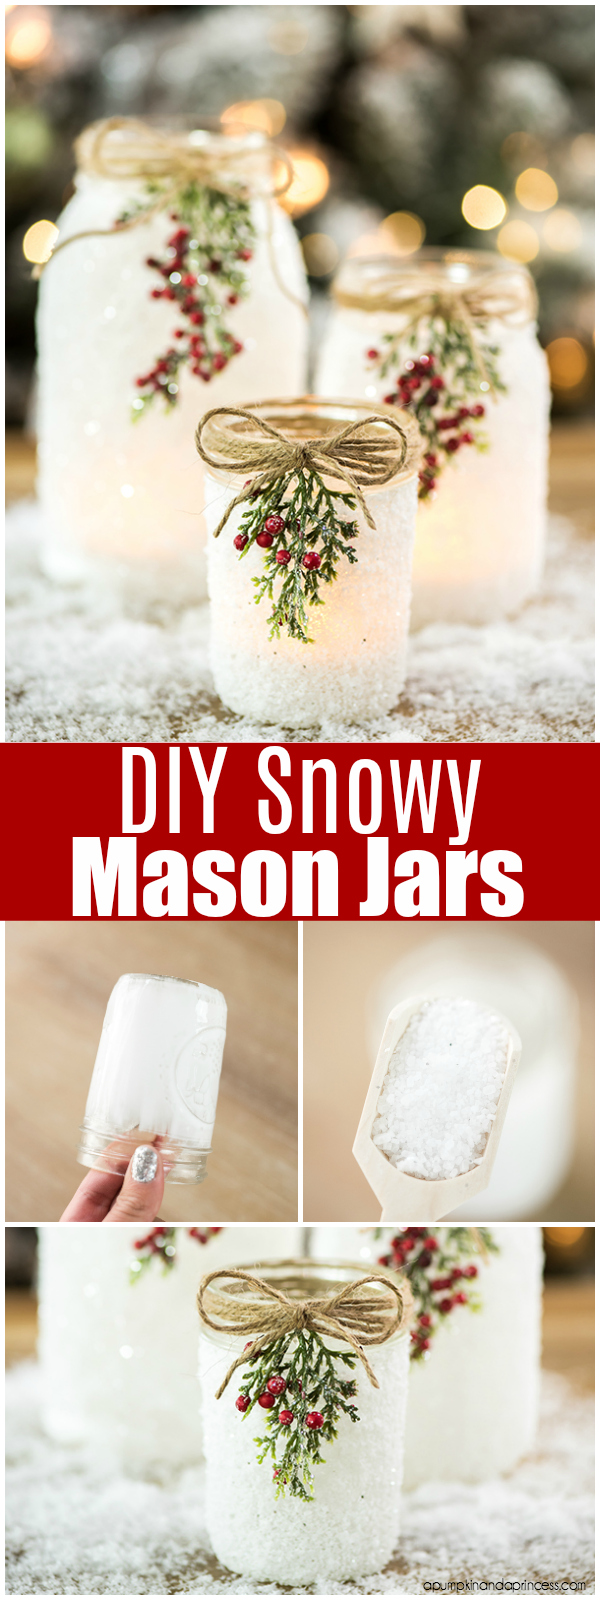 DIY Snowy Mason Jars - DIY Snowy Mason Jars -   17 diy Christmas mason jars ideas